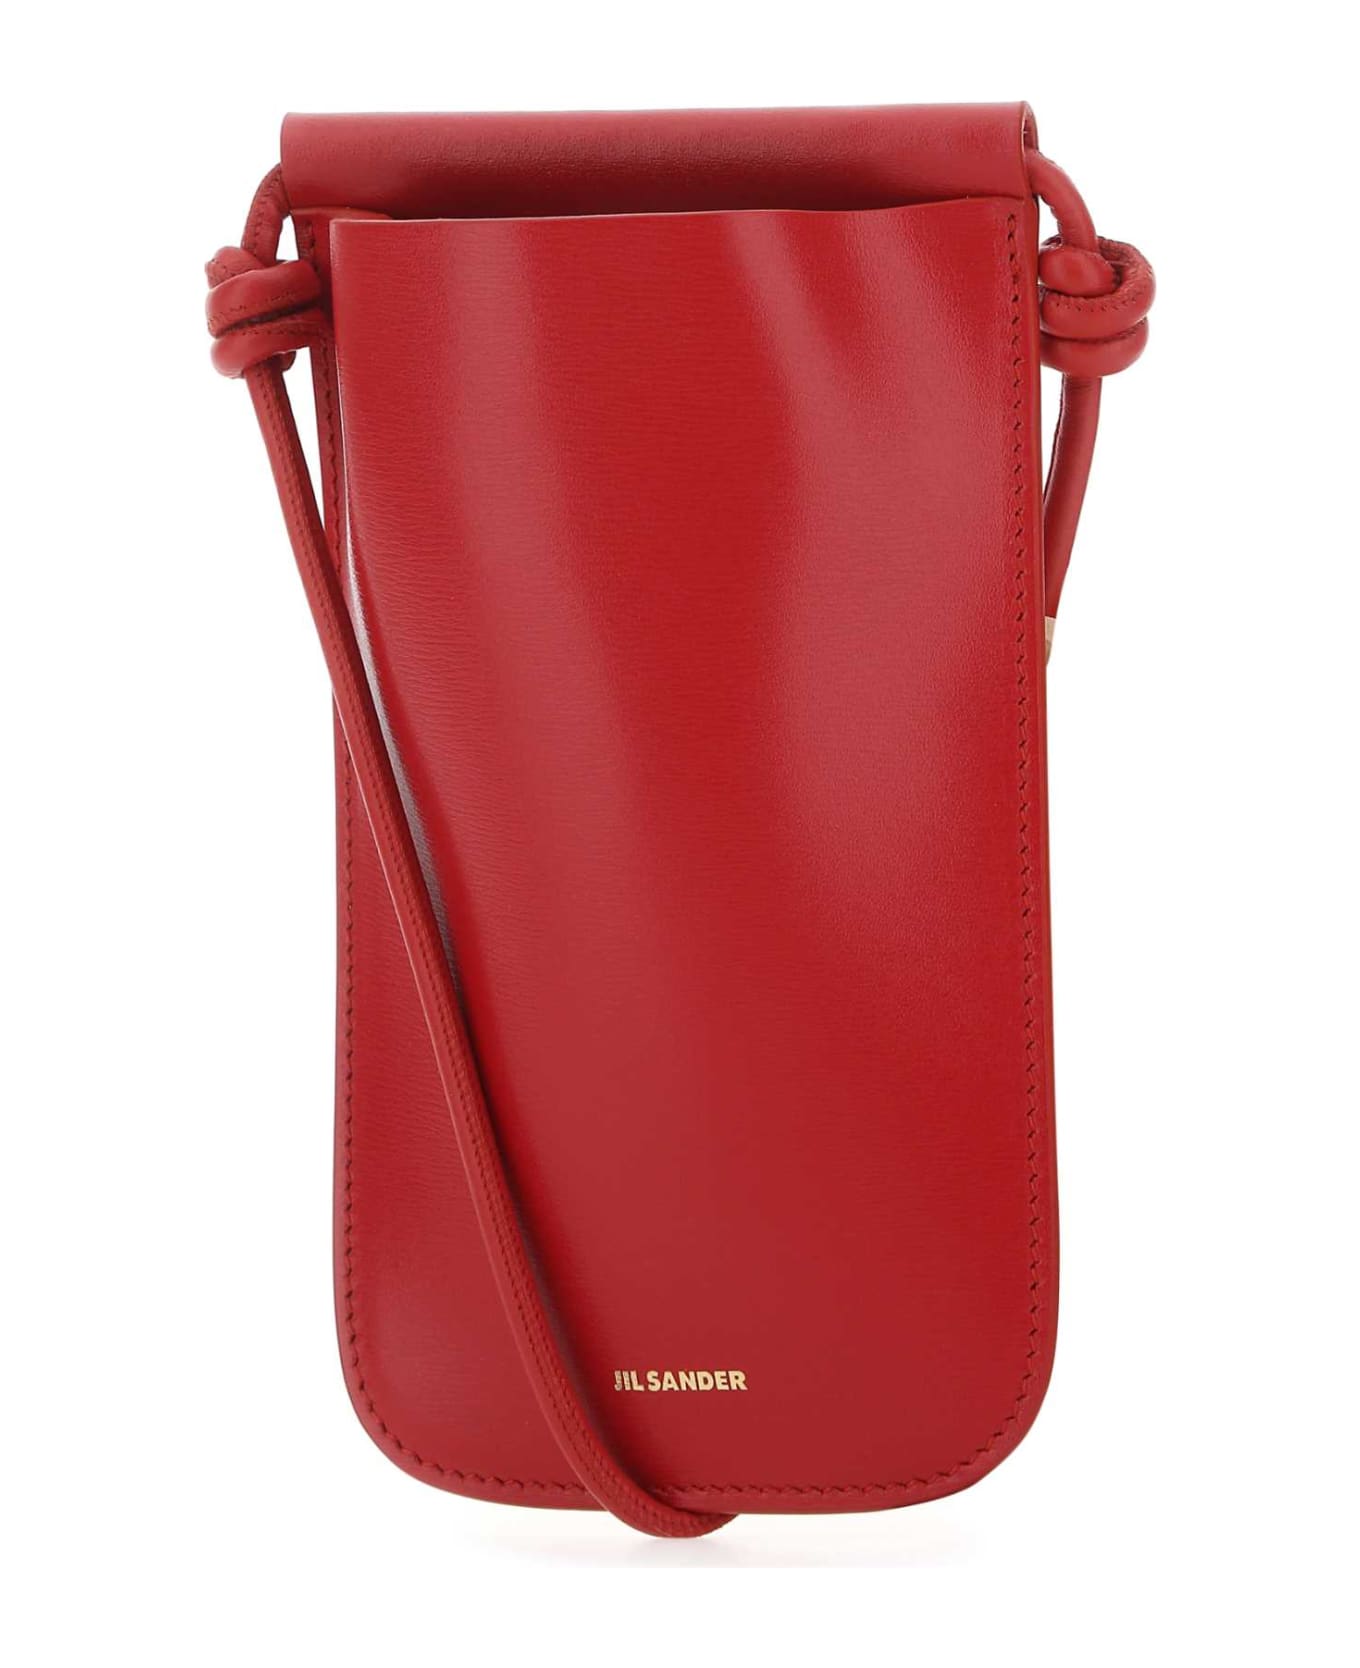 Jil Sander Red Leather Phone Case - 628